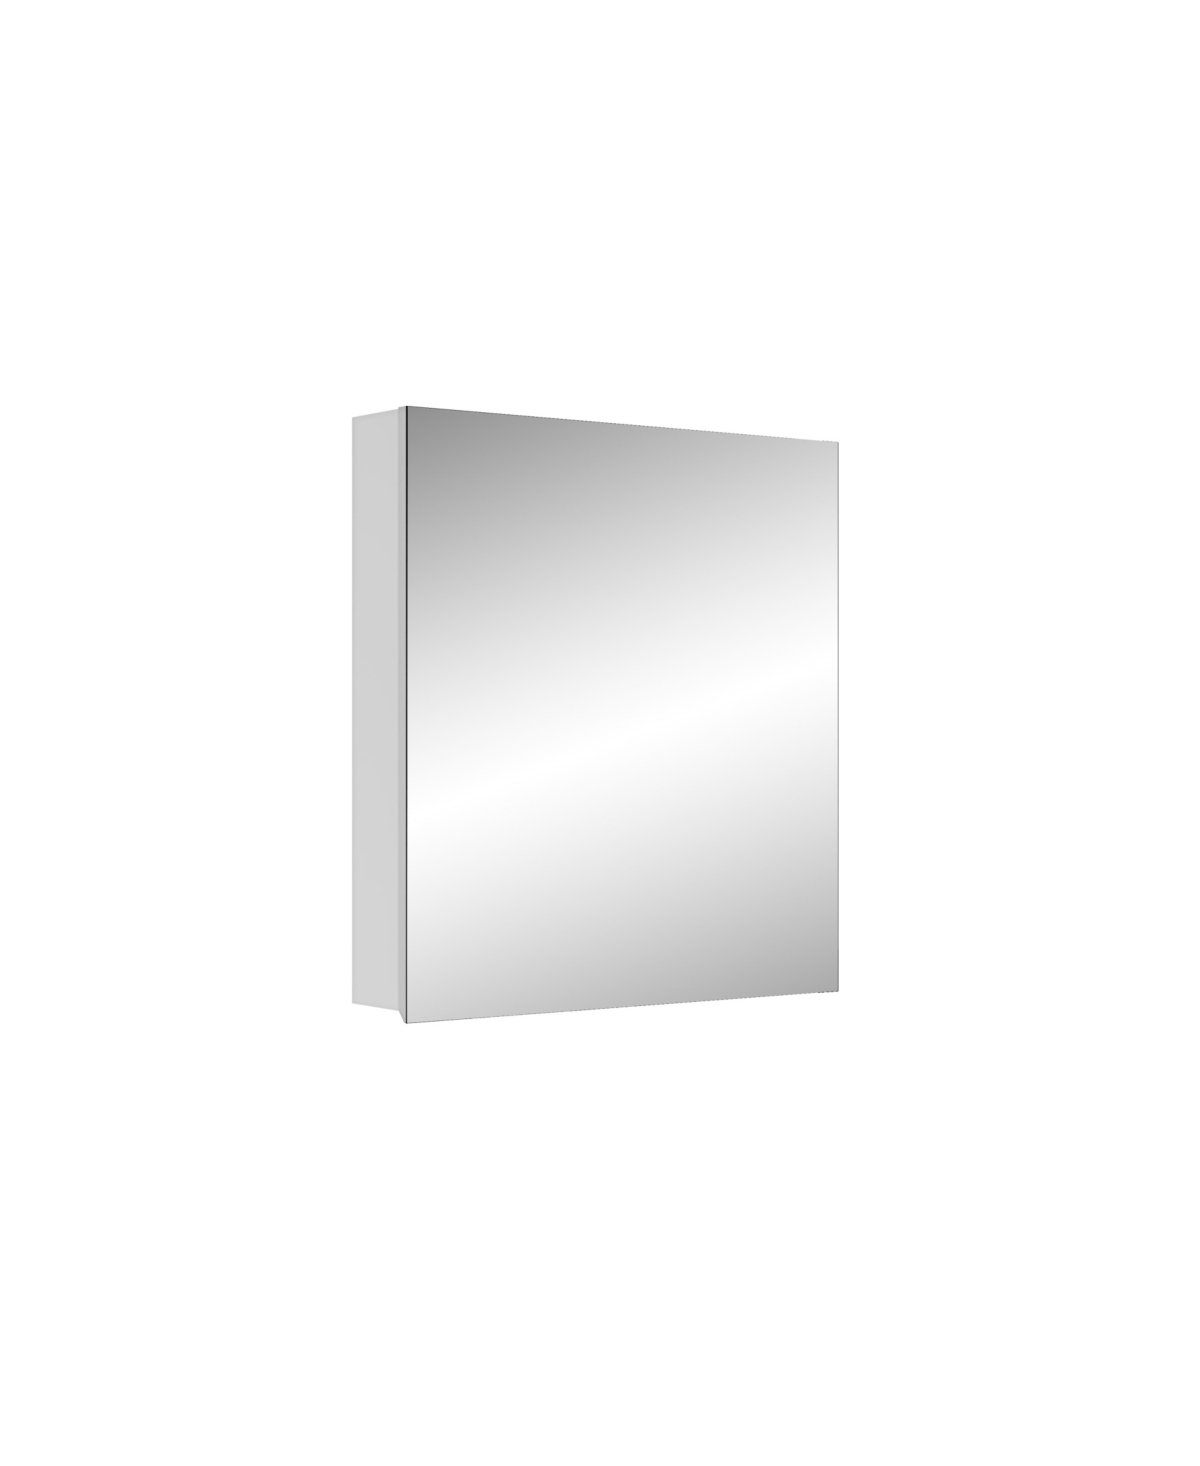 Single-Door Medicine Cabinet with Mirror, 24"x26", Silver - White